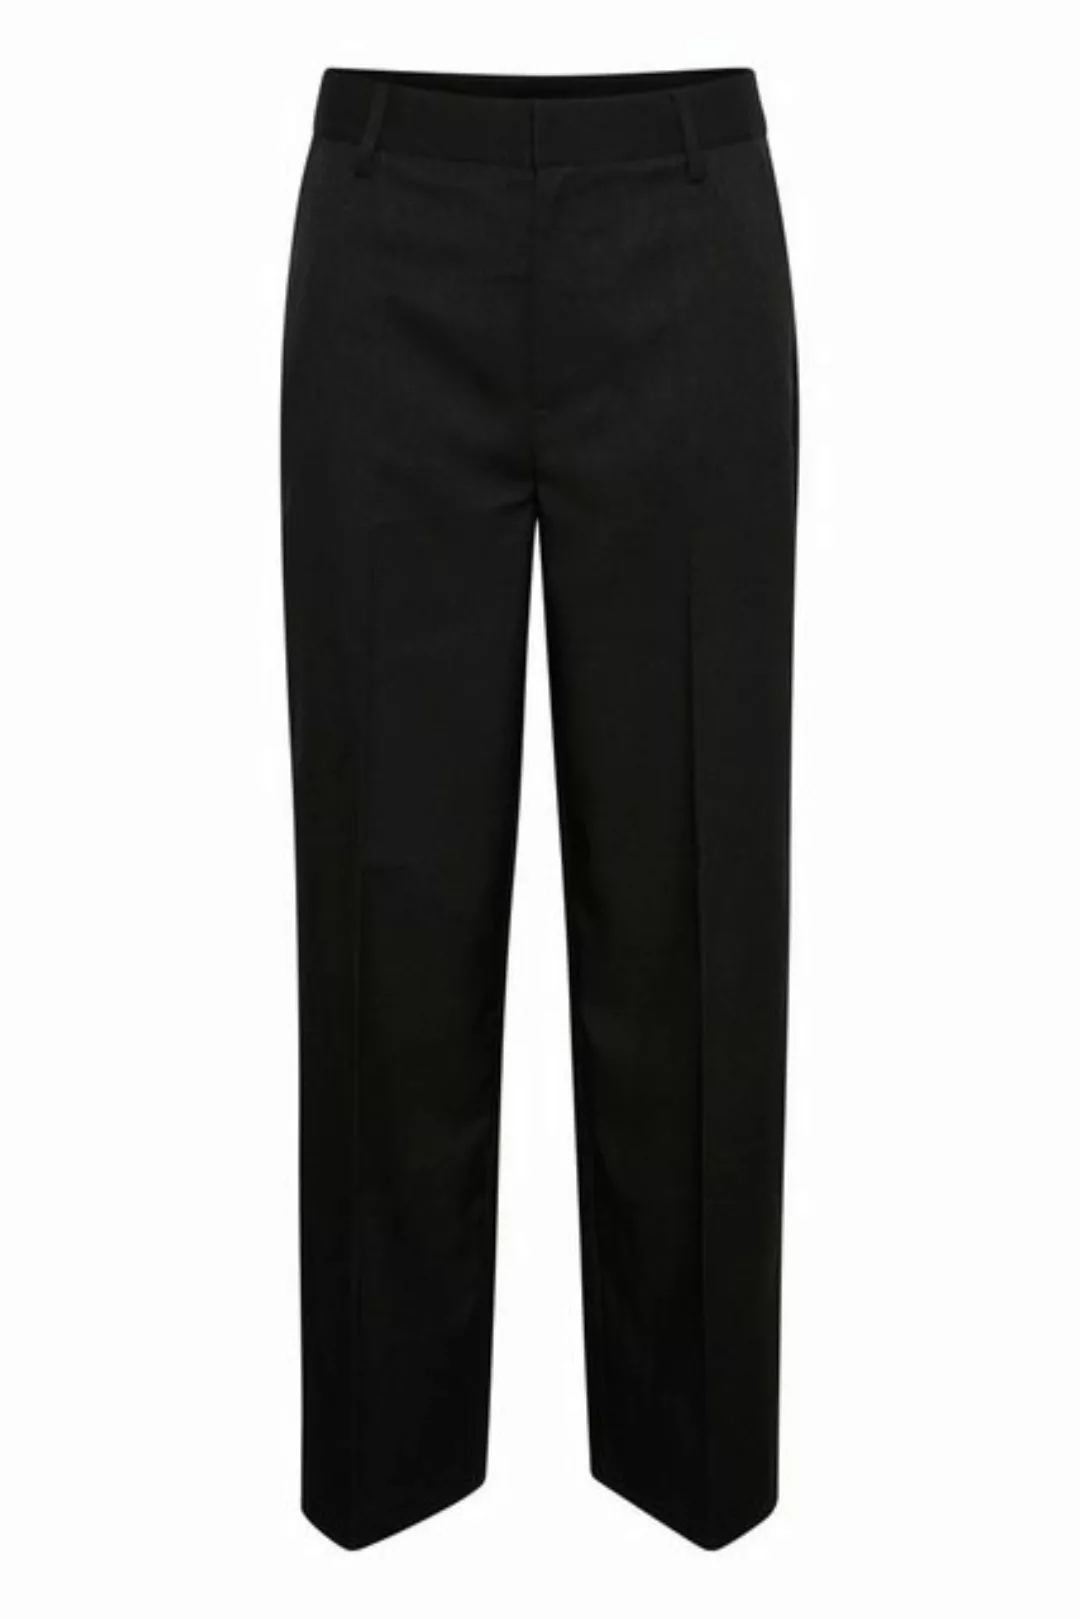 KAFFE Anzughose Pants Suiting KAsira günstig online kaufen